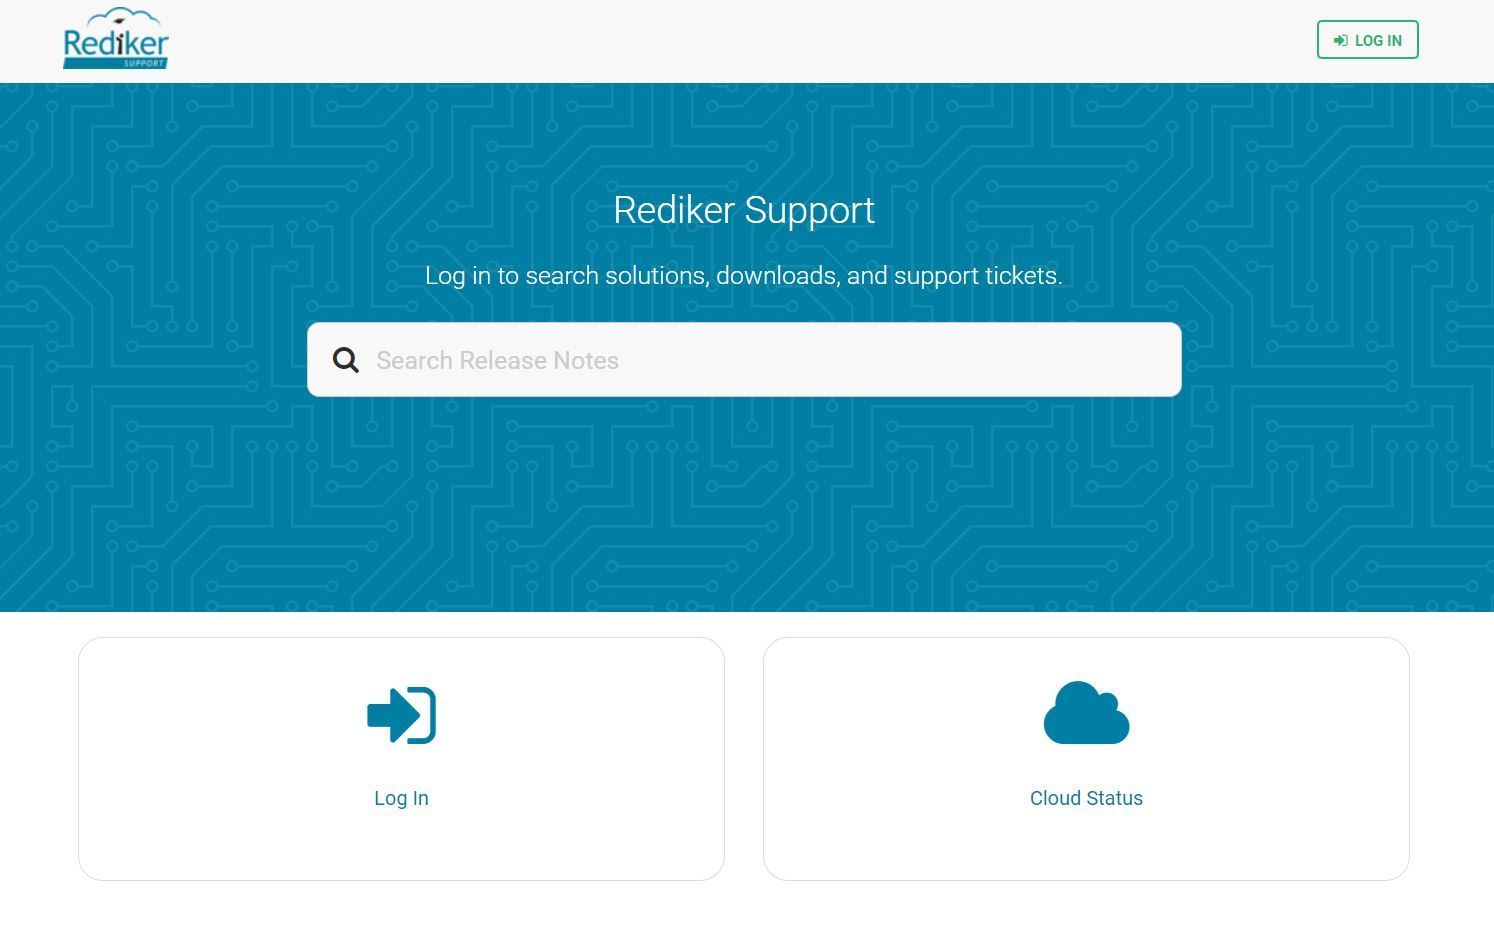 Rediker Support Homepage